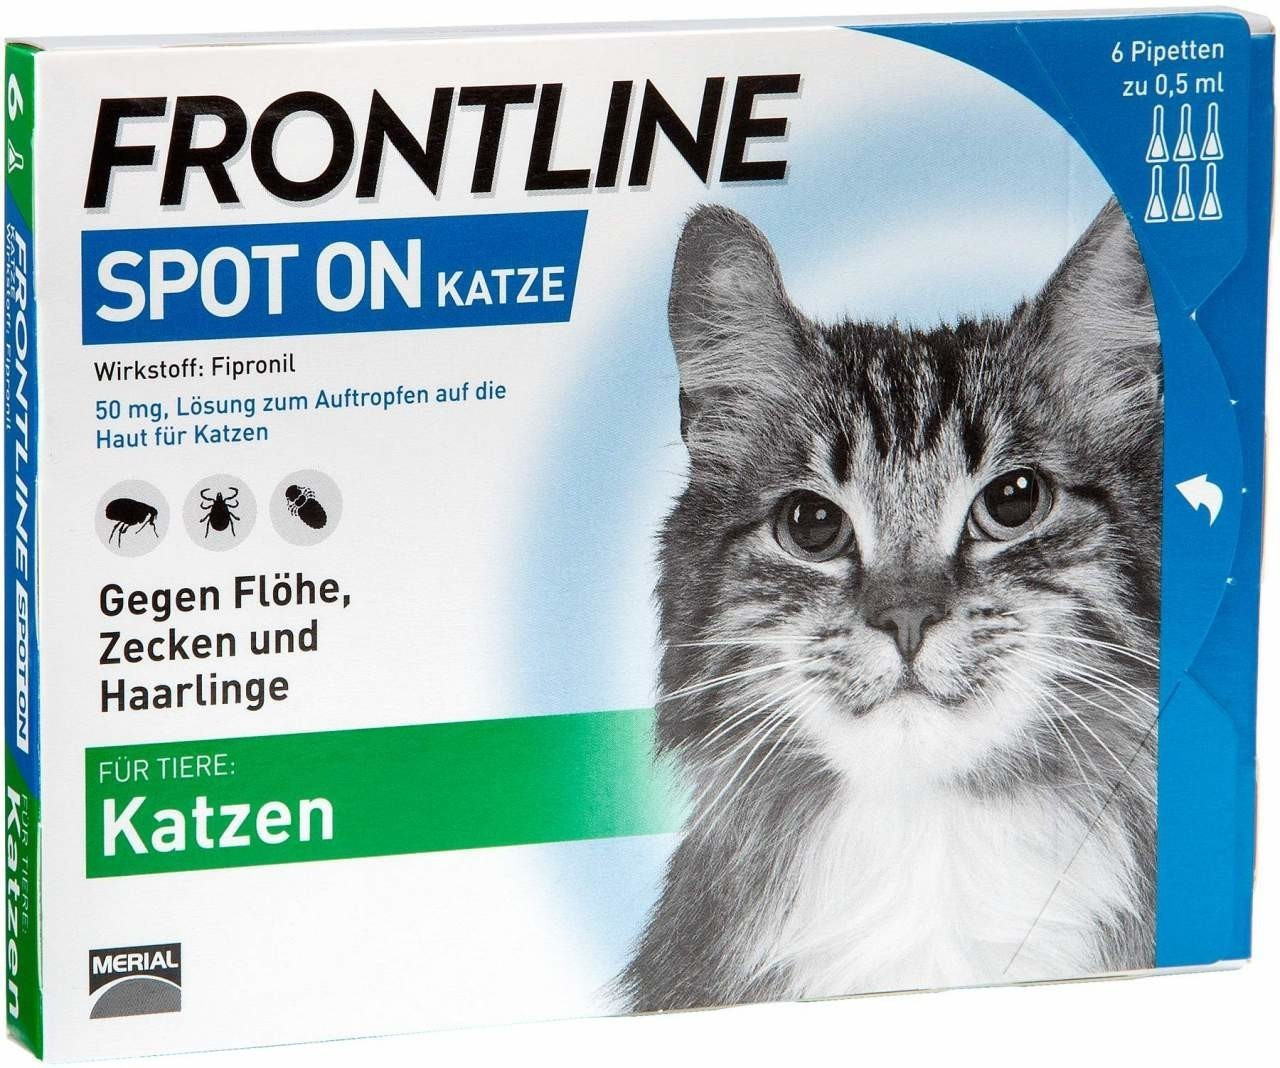 Frontline Spot On Katze 6 Stück ab 19,65 € Preisvergleich bei idealo.de